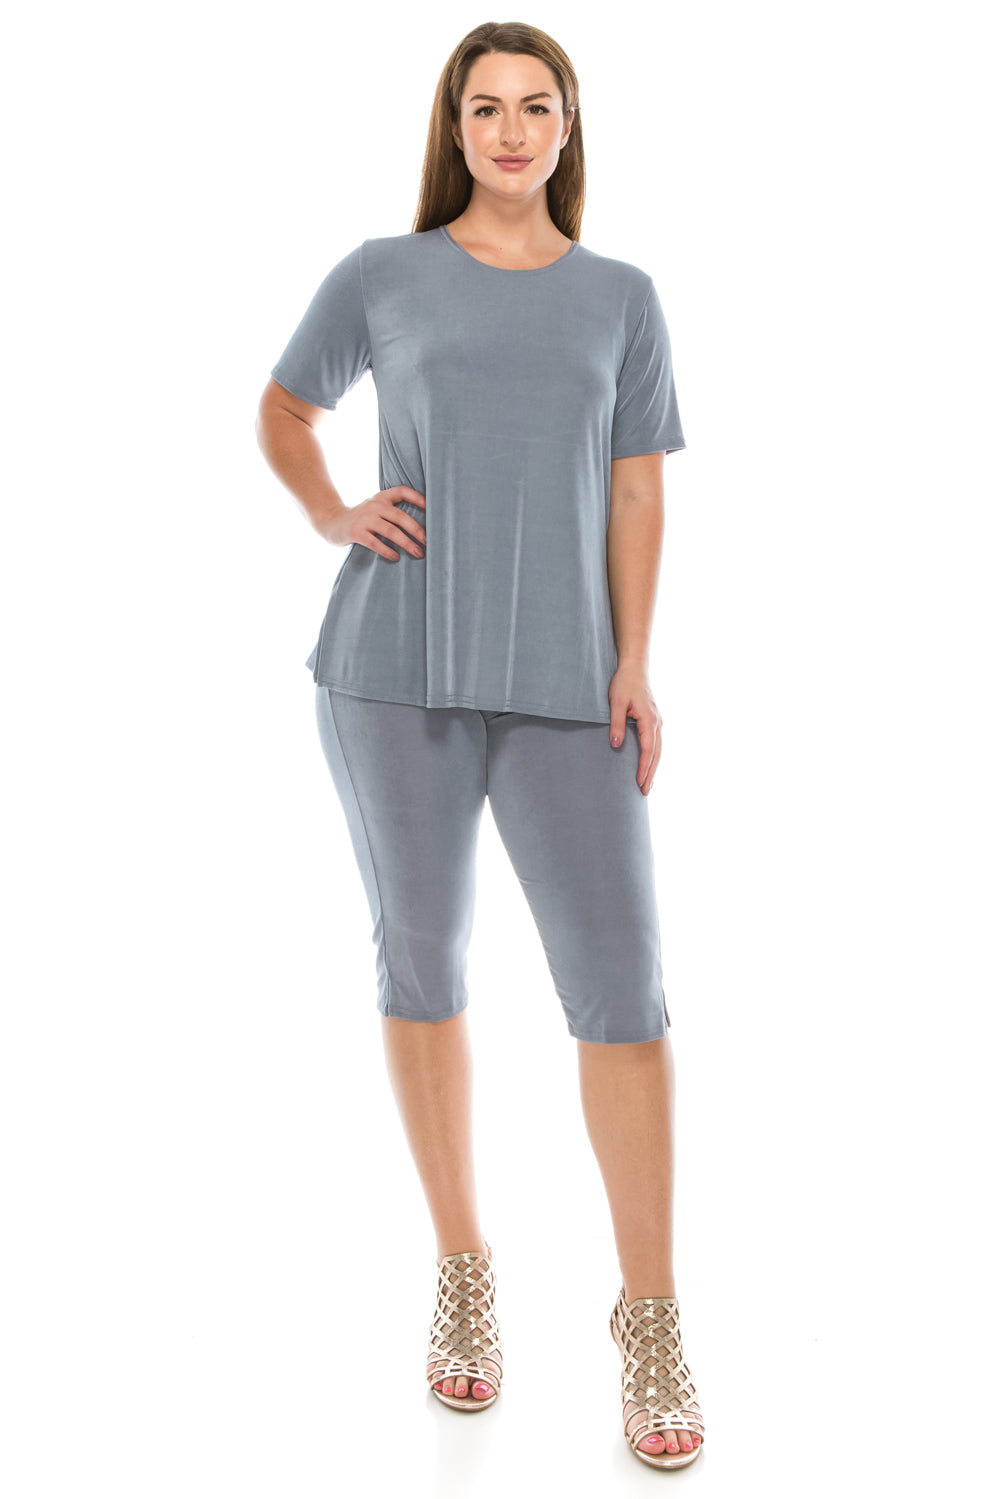 Jostar Women's Stretchy Capri Pant Set Short Sleeve, 903BN-S - Jostar Online